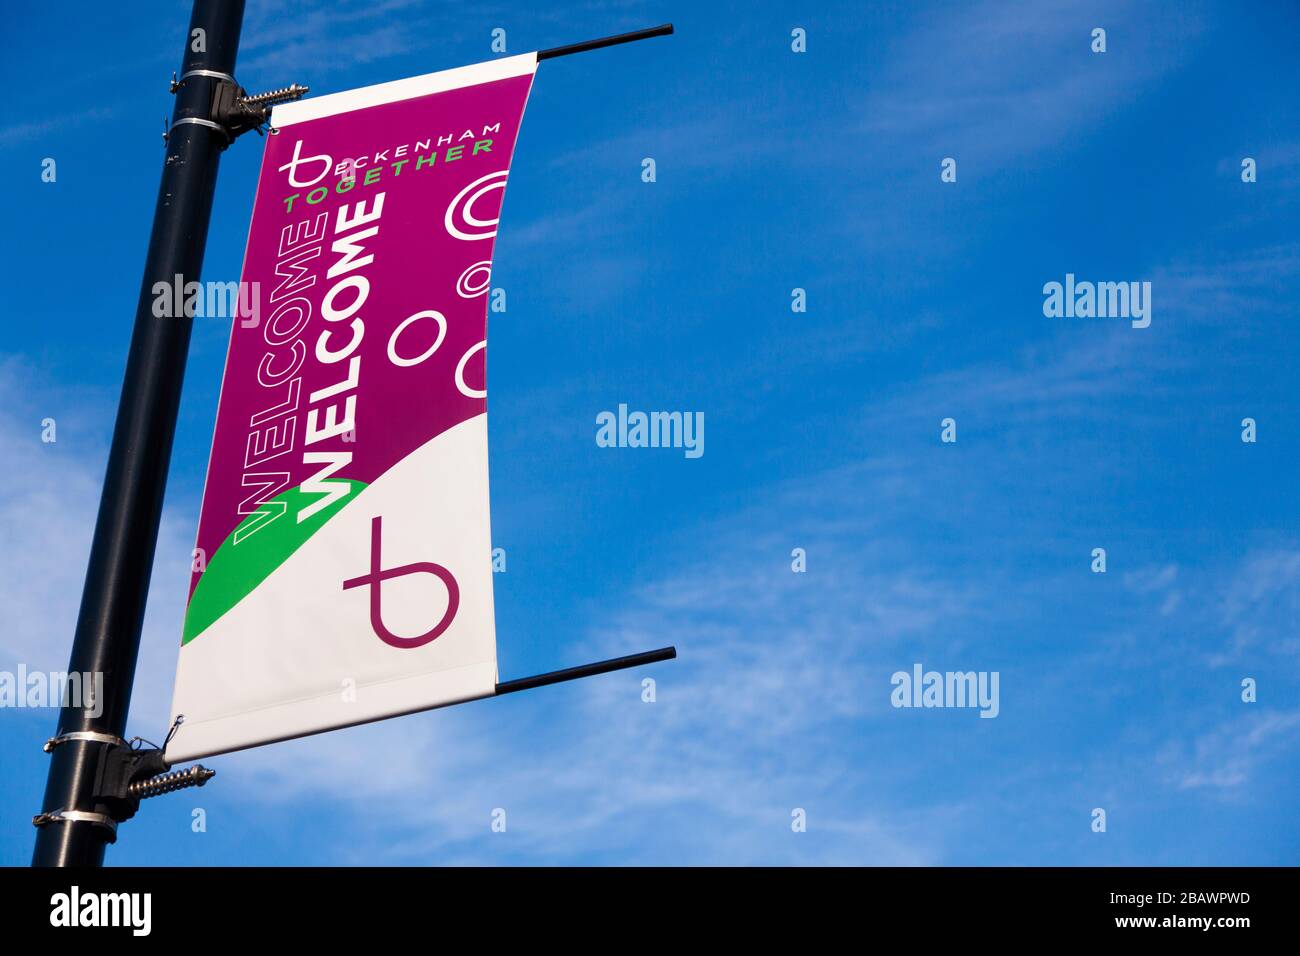 Banner on street lamp post, 'Beckenham Together Welcome', High Street, Beckenham, London Stock Photo